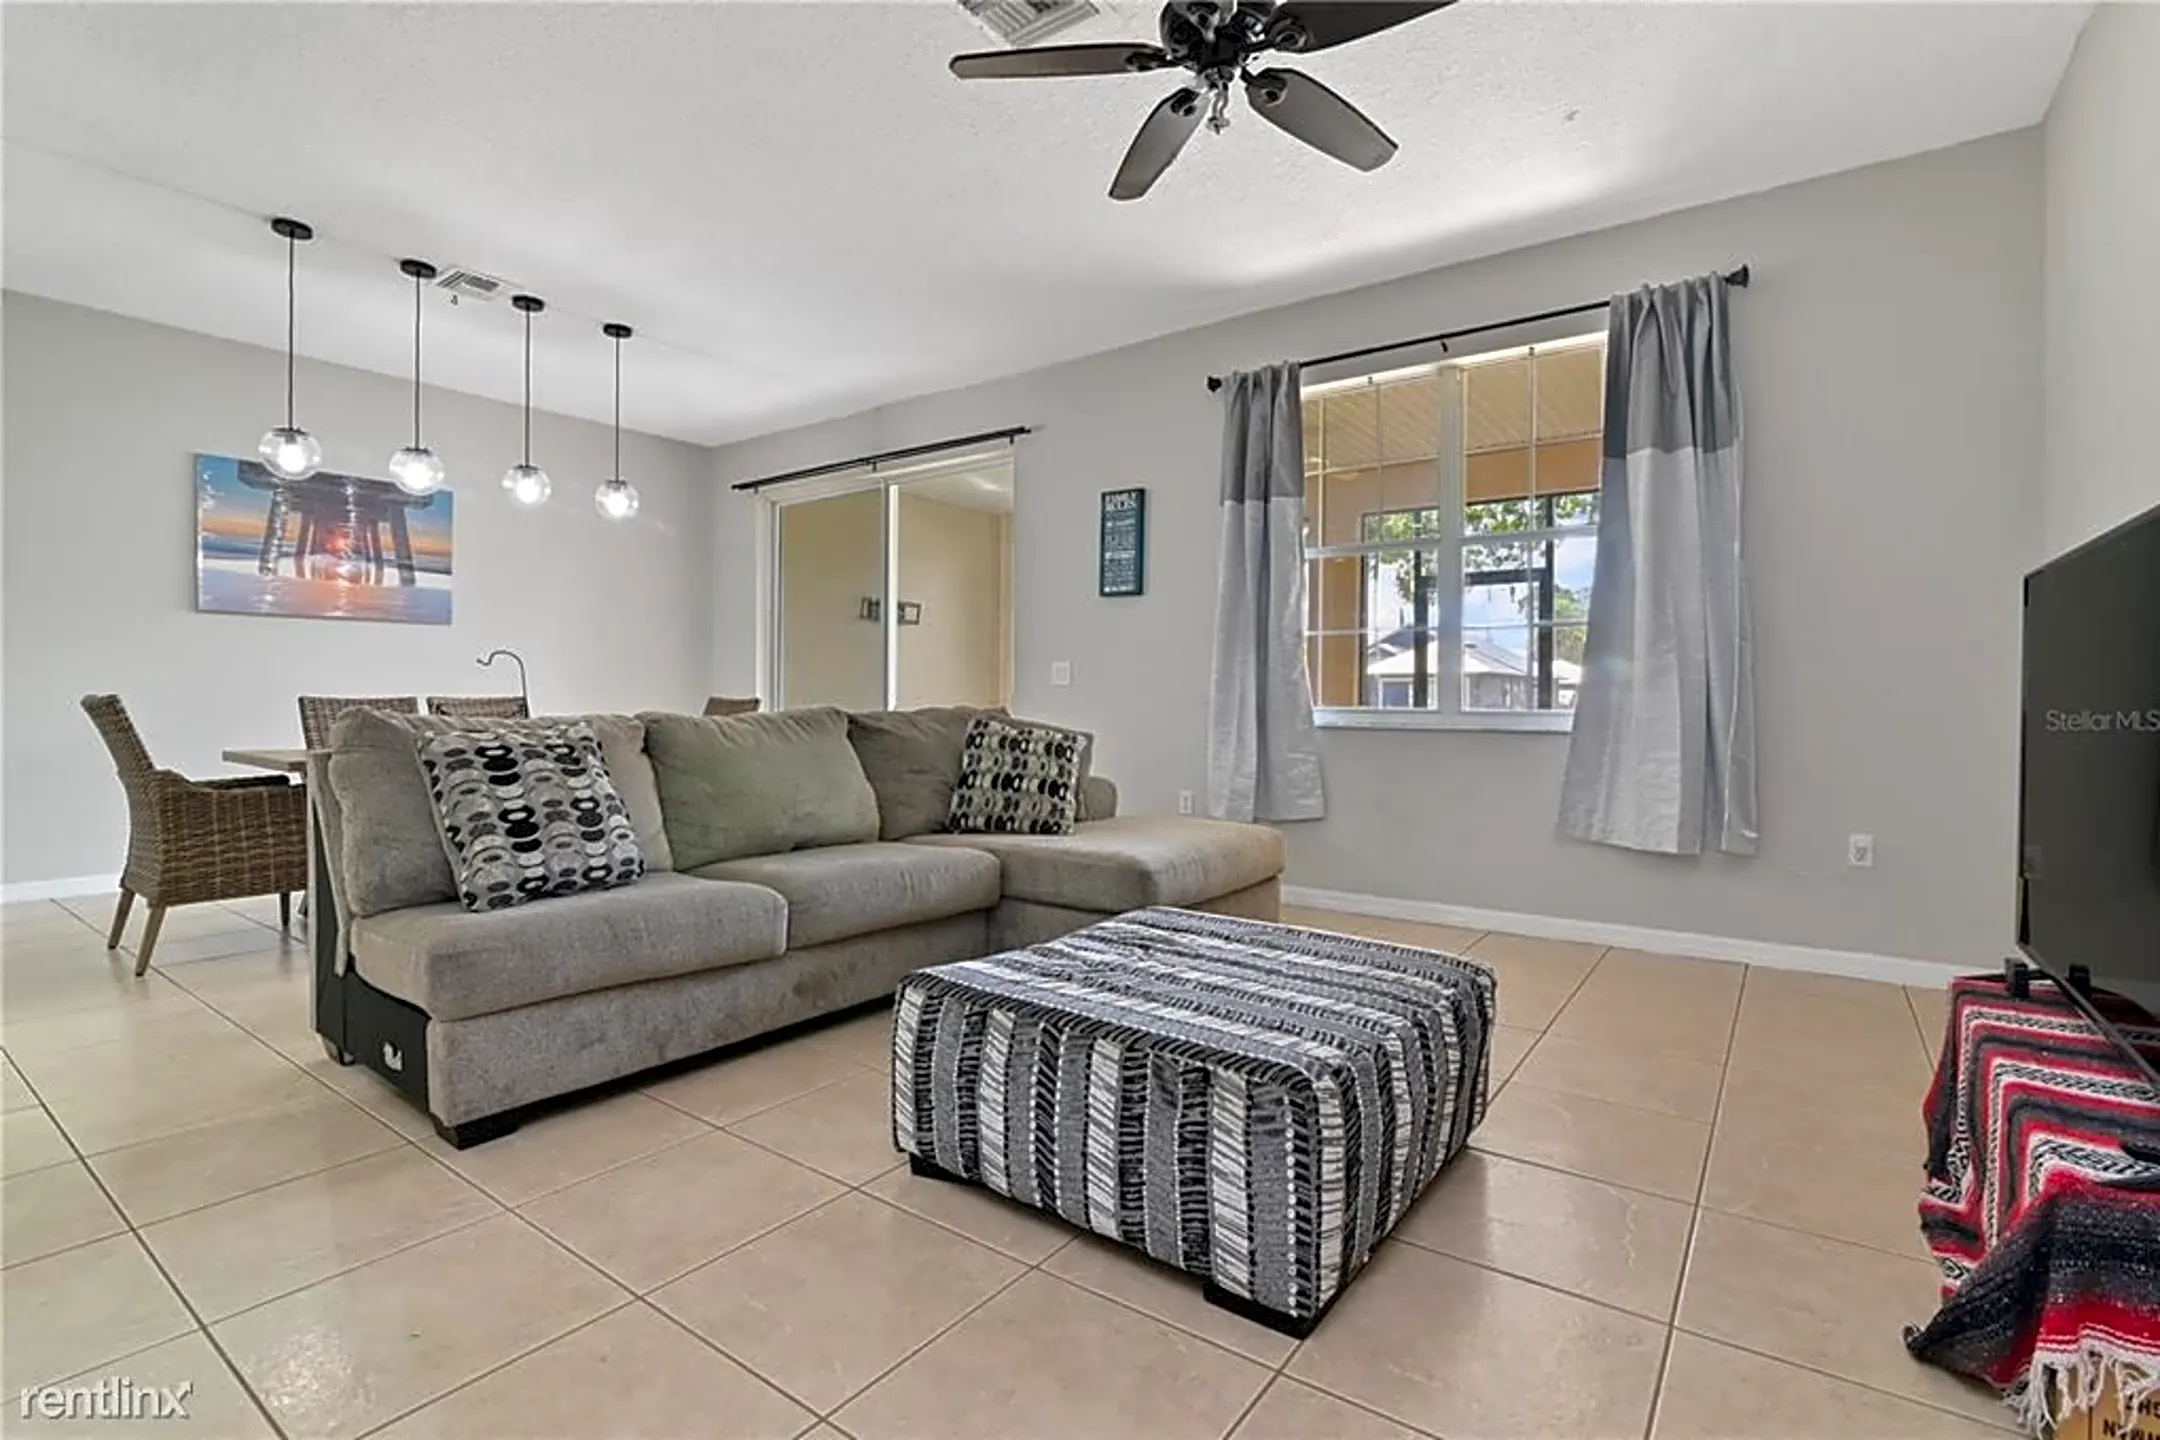 Living Room - 3421 Home Town Ln - Saint Cloud, FL